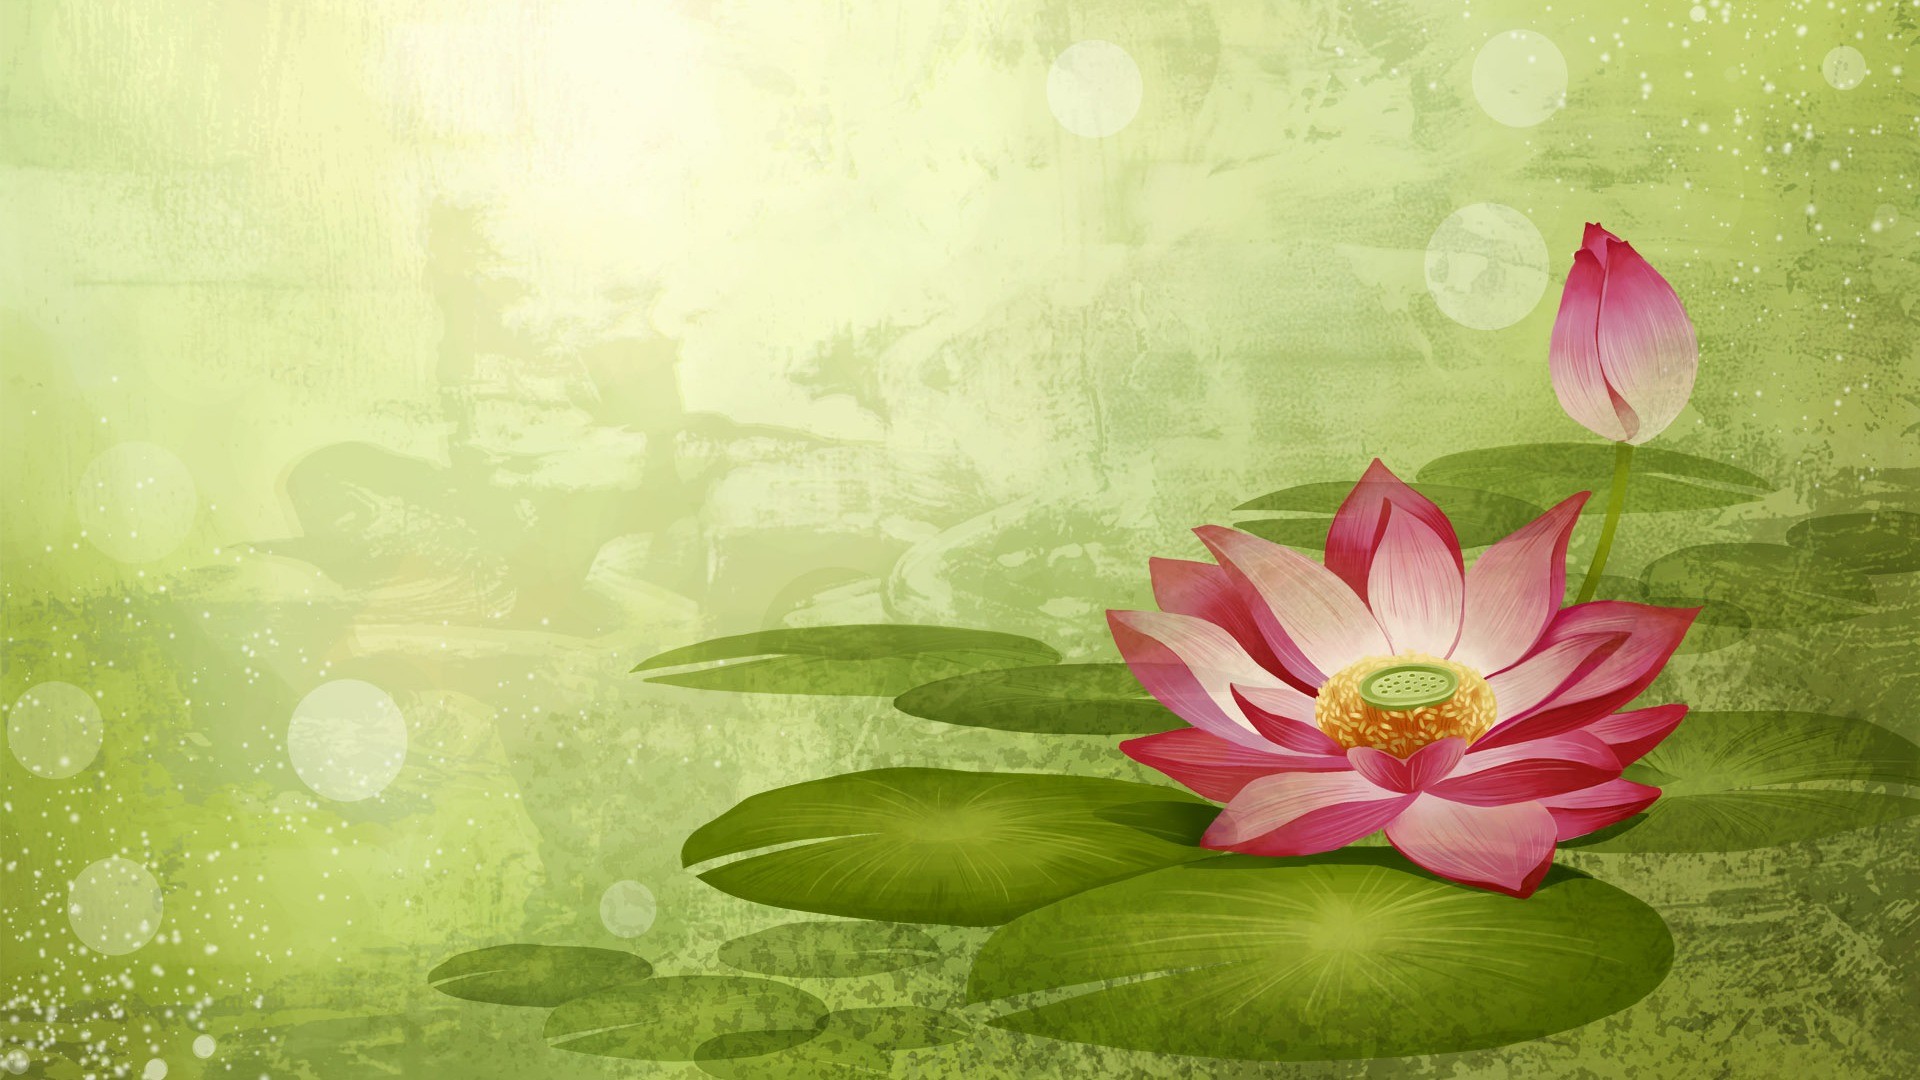 1920x1080 Wallpaper Lotus Flower Design